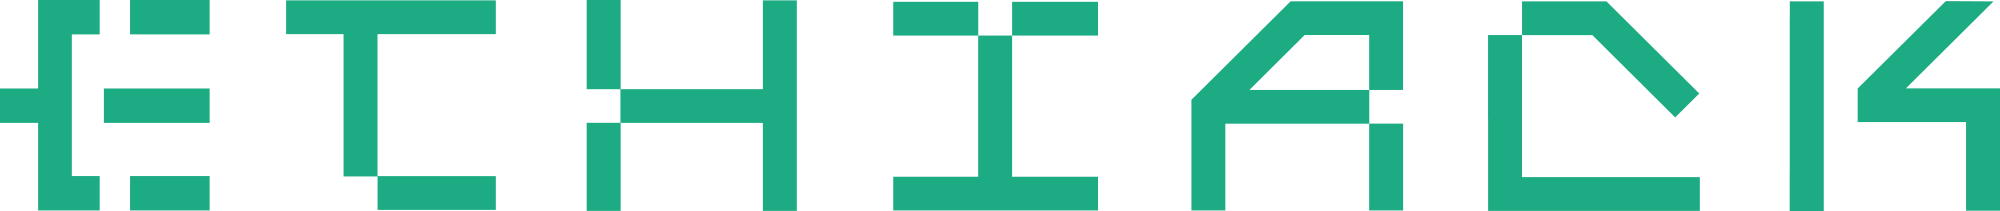 ethiack-logo